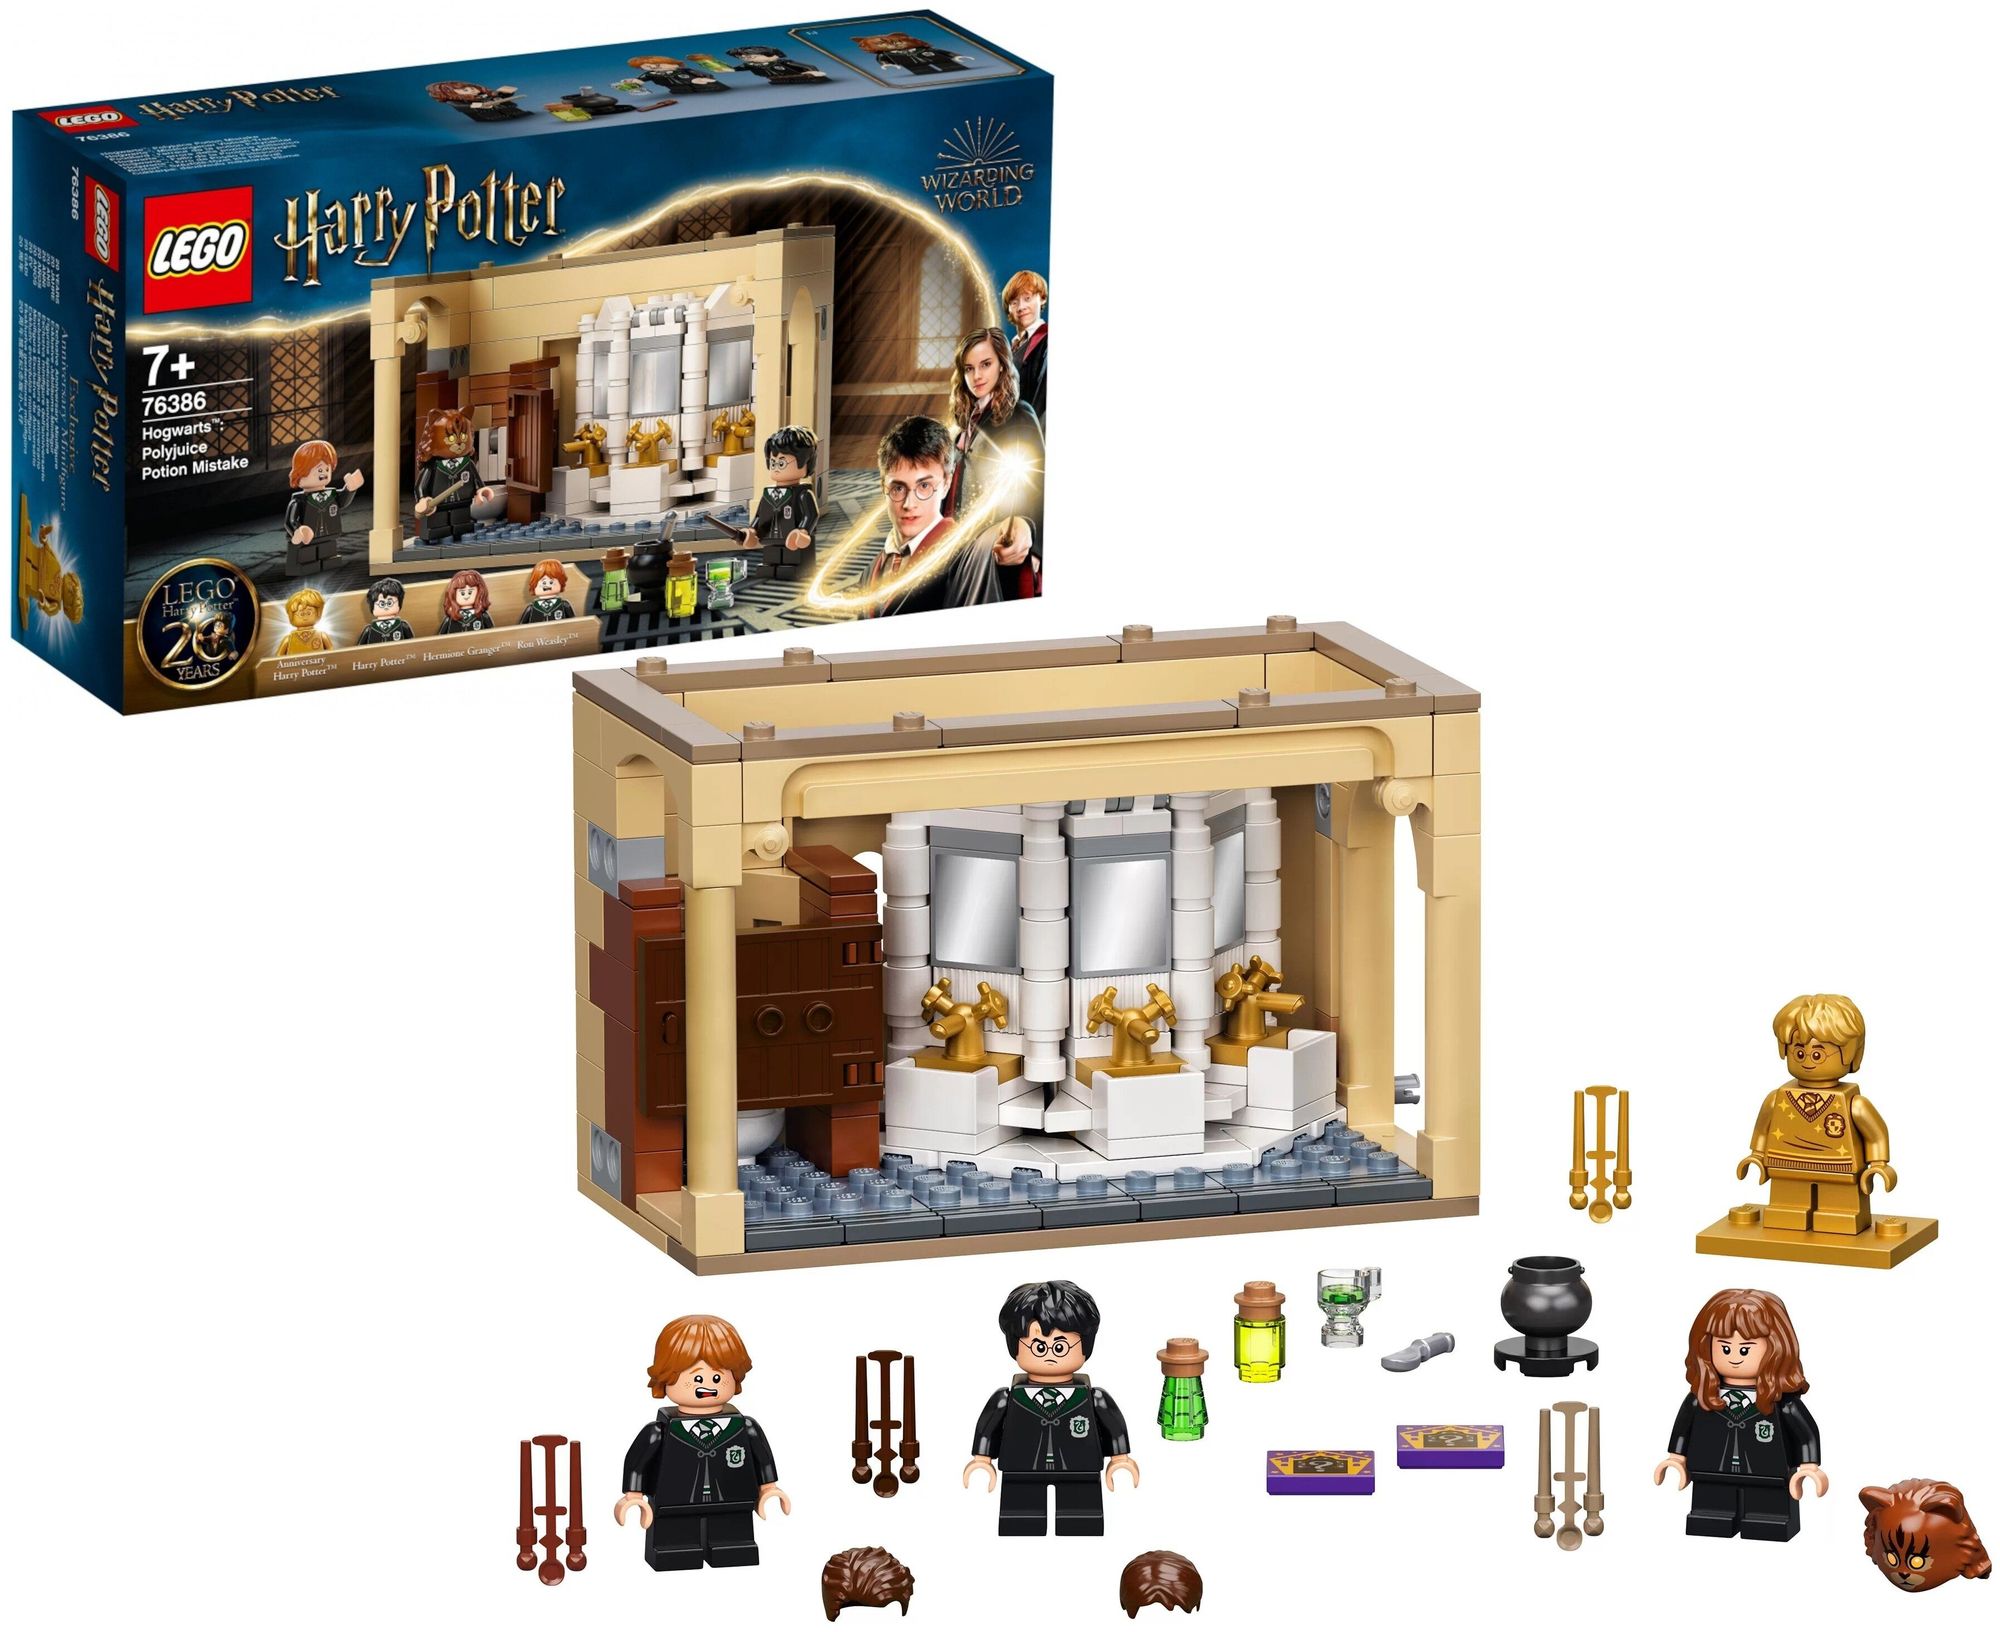 Конструктор Lego Harry Potter Hogwarts: Polyjuice Potion Mistake пластик (76386) цена и фото